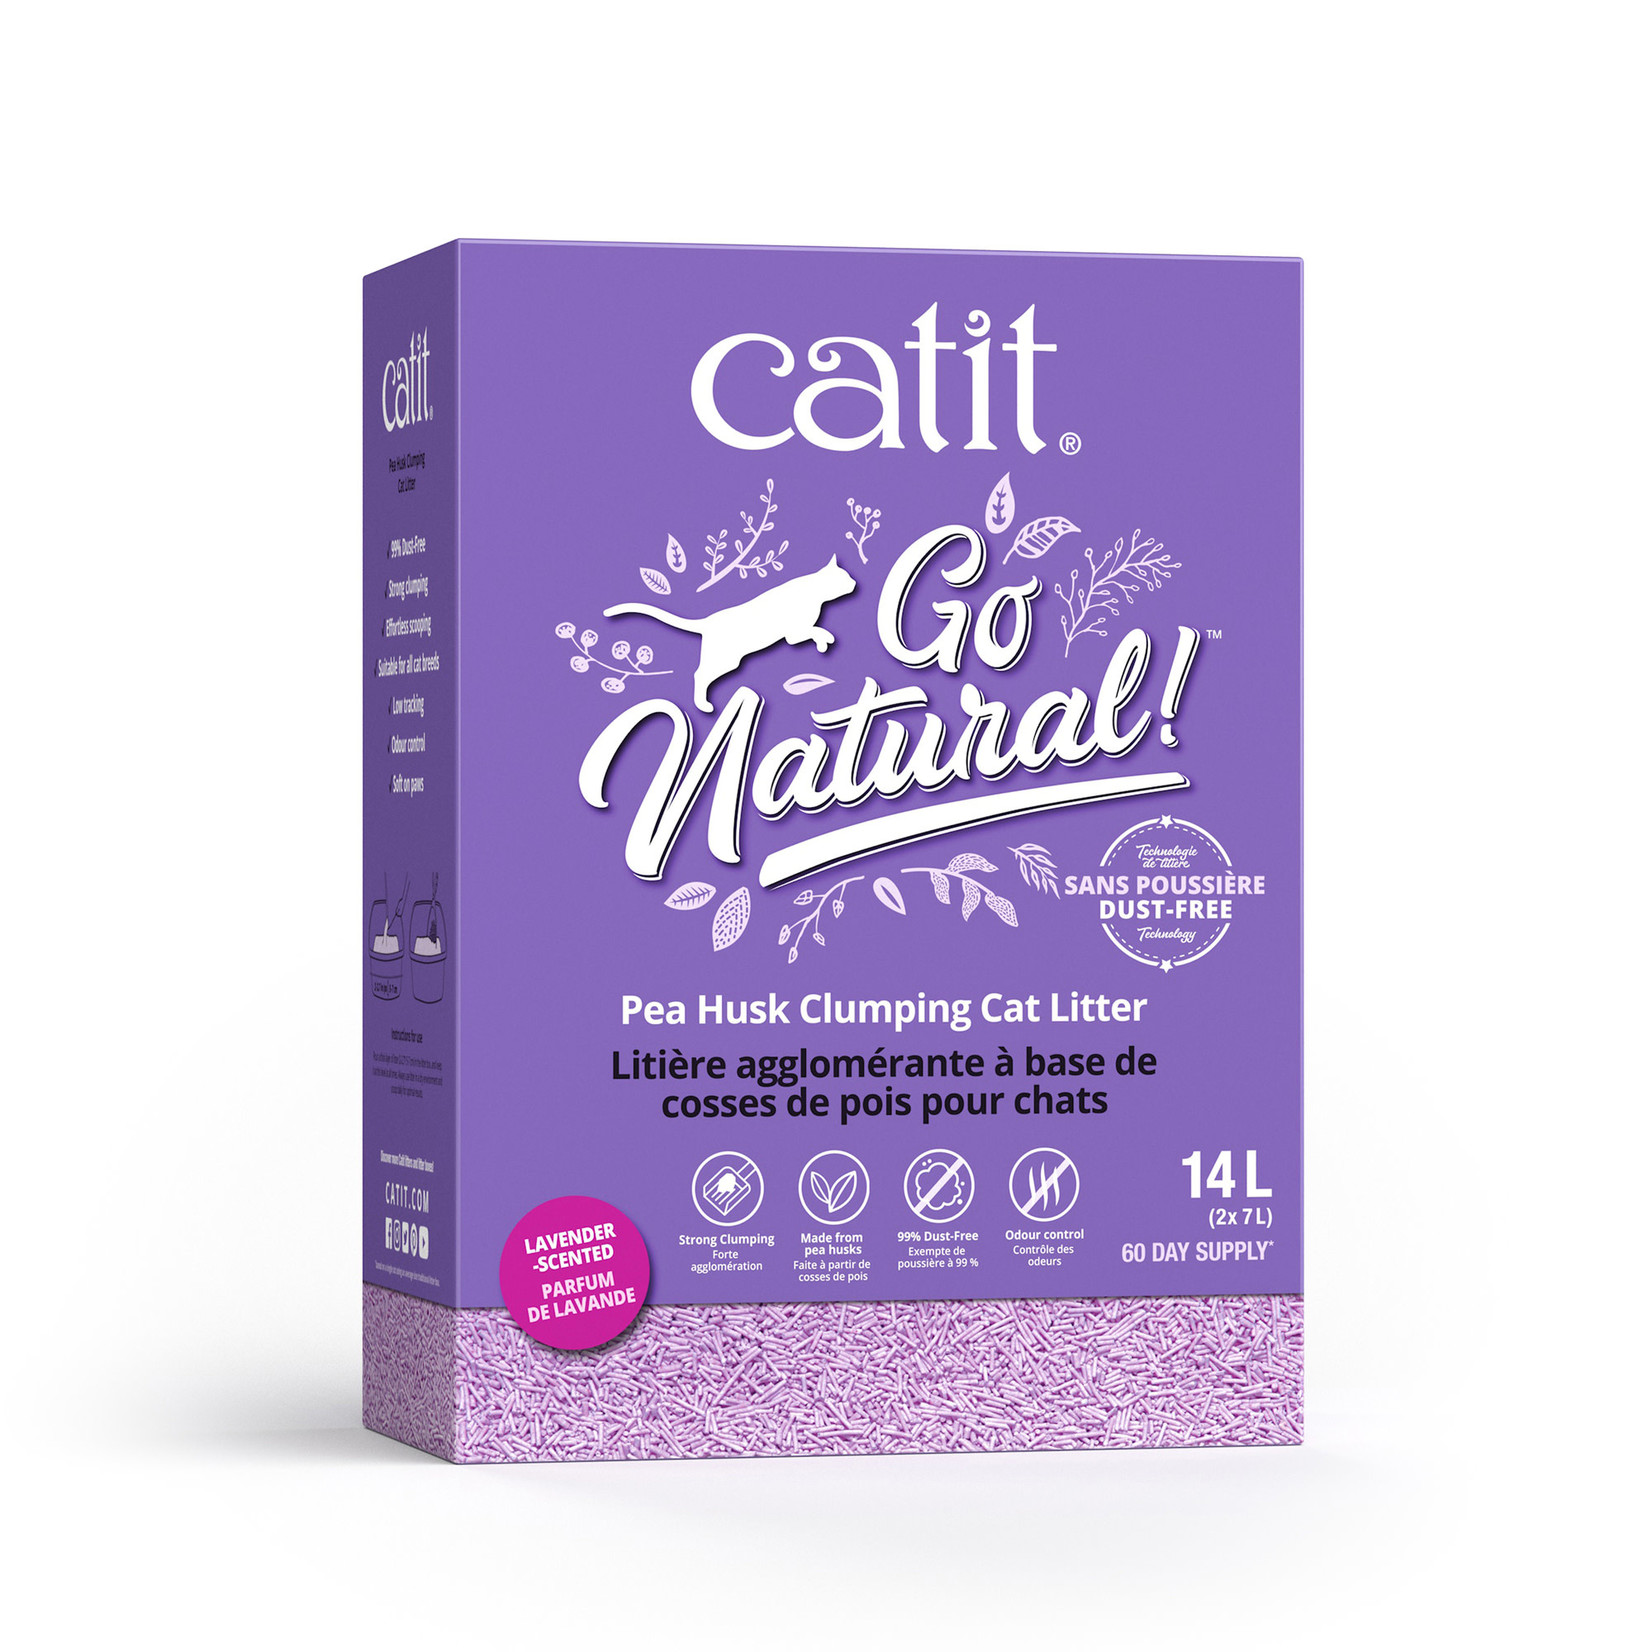 CAT IT Catit Go Natural! Pea Husk Clumping Cat Litter - Lavender - 14 L box